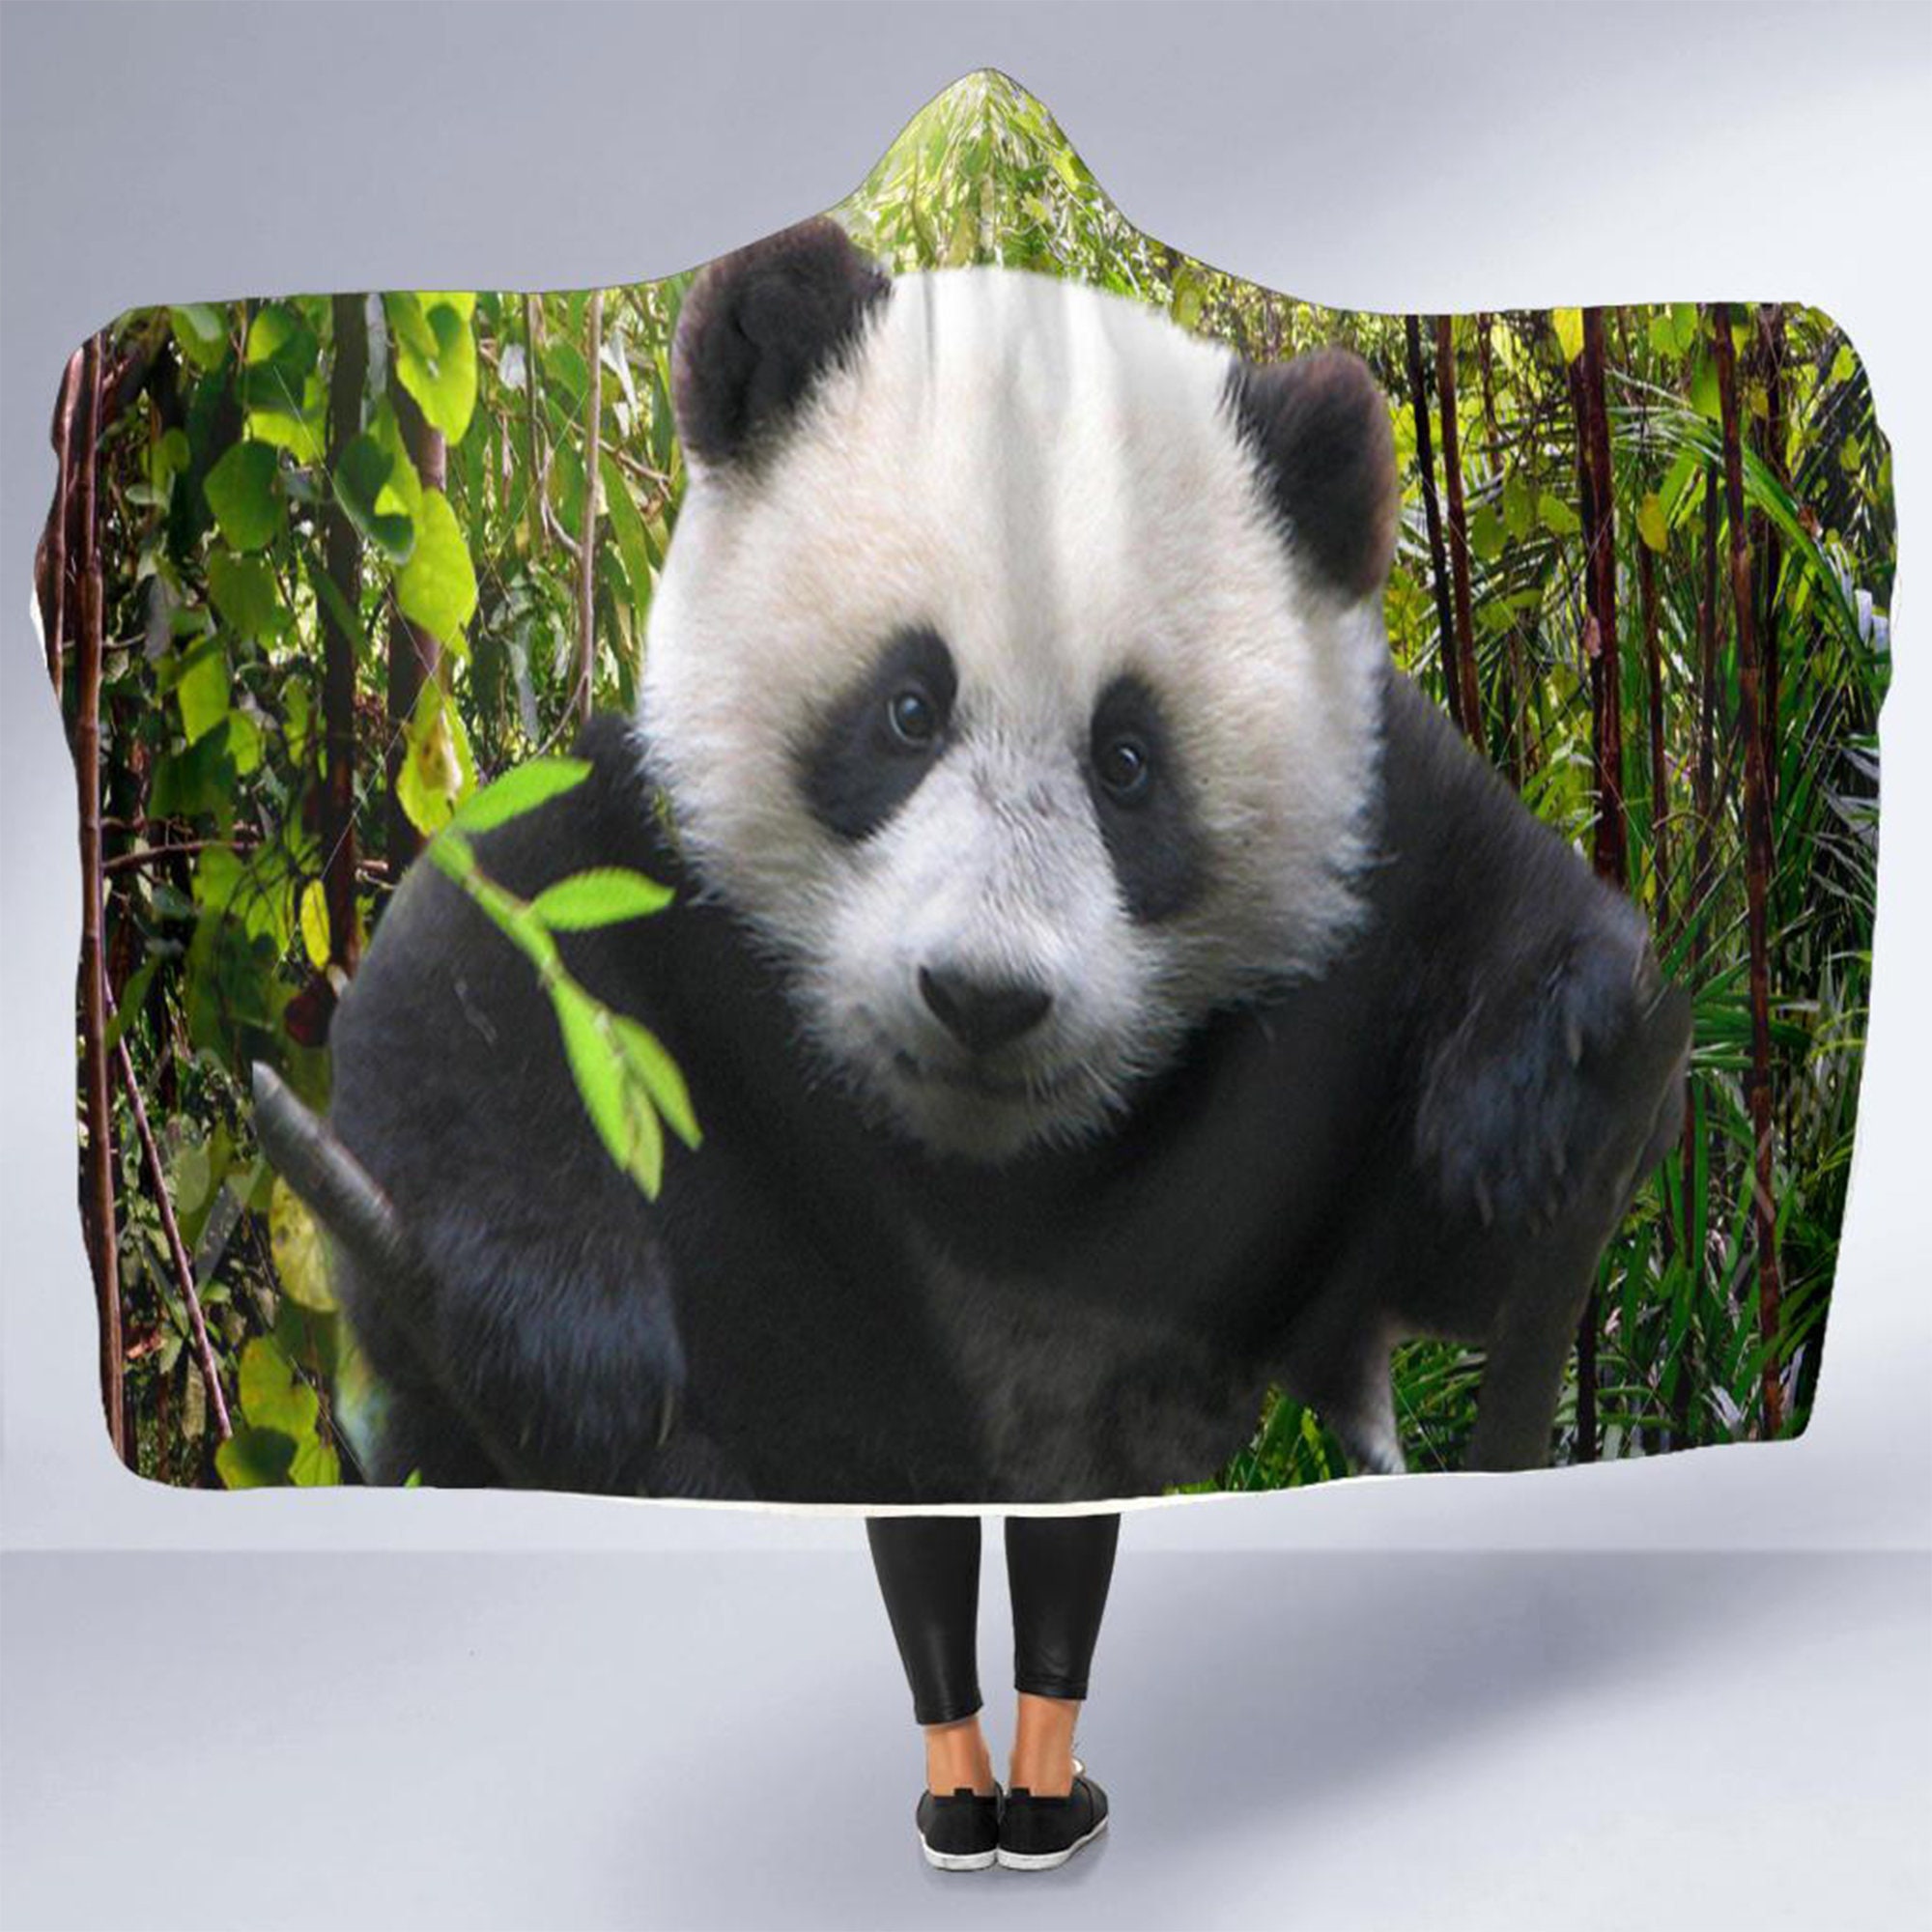 Panda Hooded Blanket 45x45 Super Soft Panda Blanket for Adults